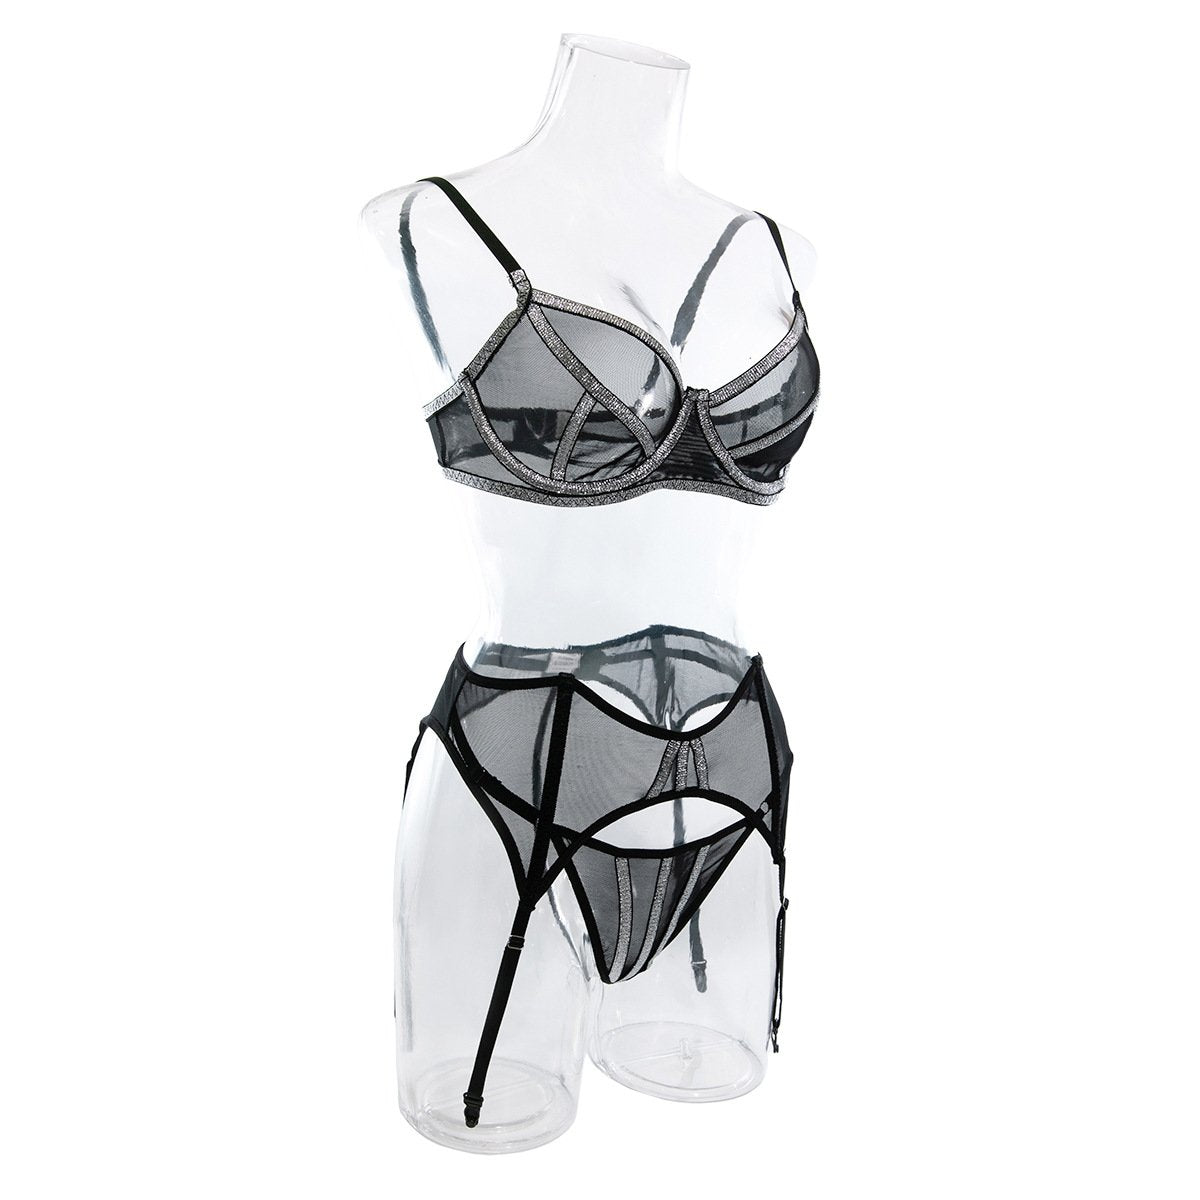 Sheer mesh corset garter cami lingerie set